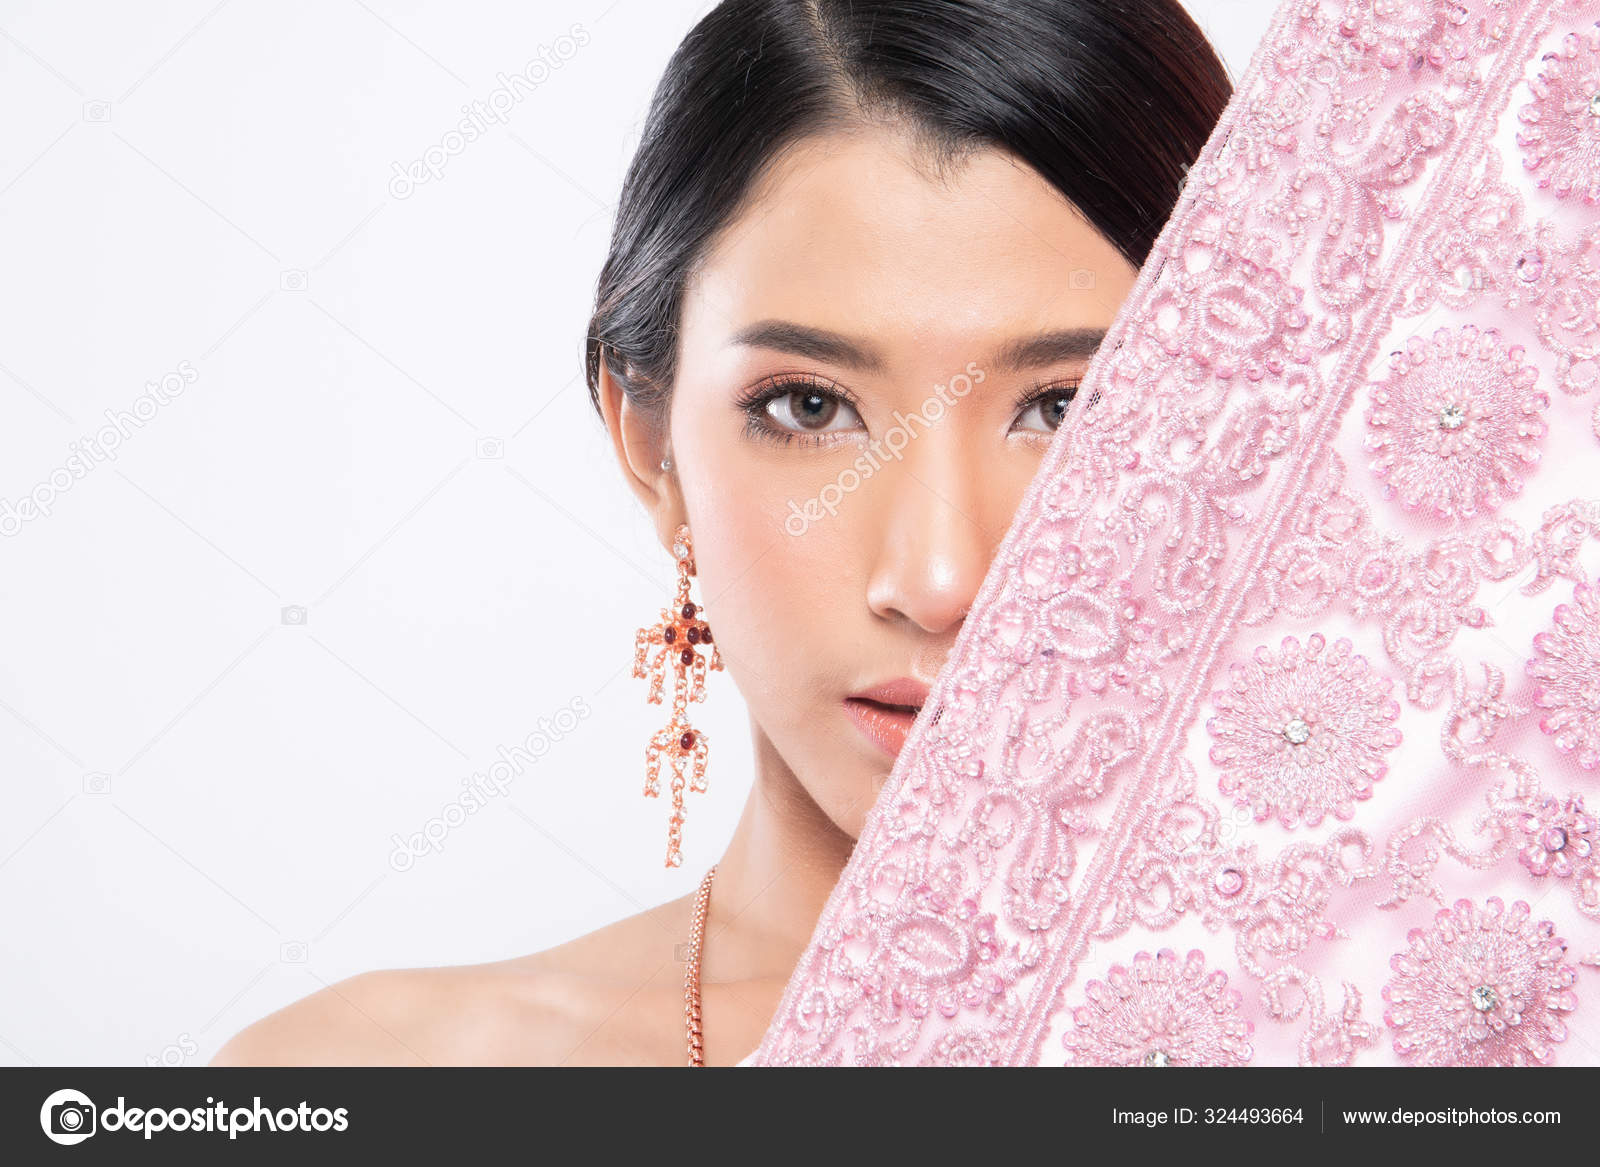 https://st3.depositphotos.com/4562279/32449/i/1600/depositphotos_324493664-stock-photo-thai-woman-wearing-typical-traditional.jpg